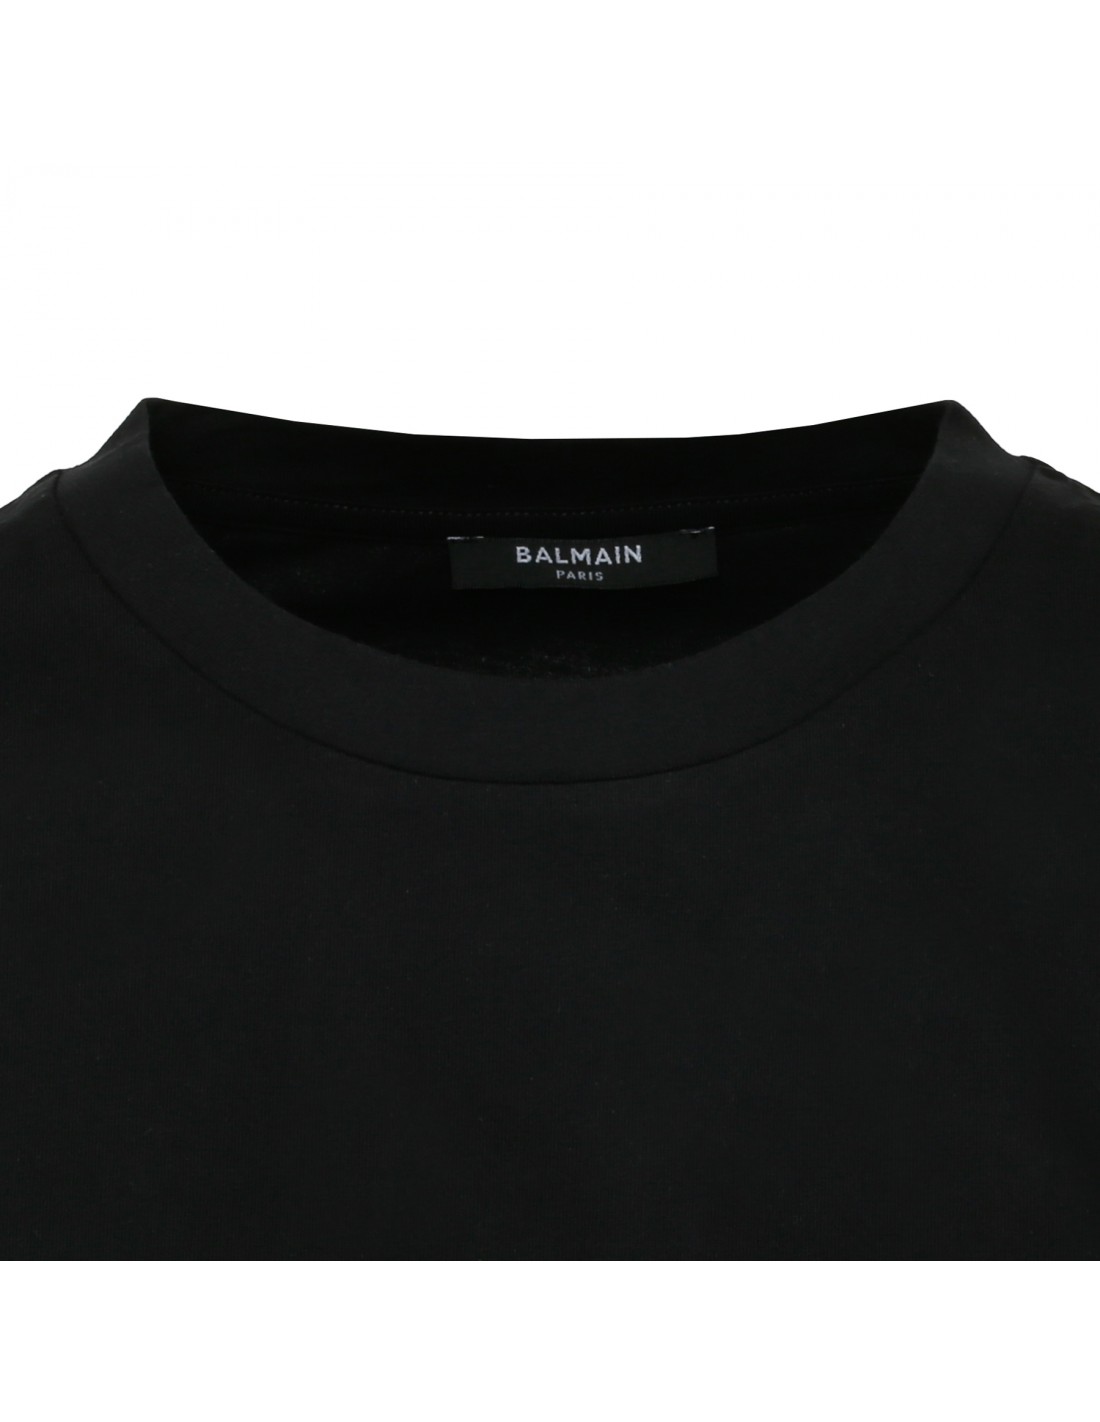 Logo print black T-shirt